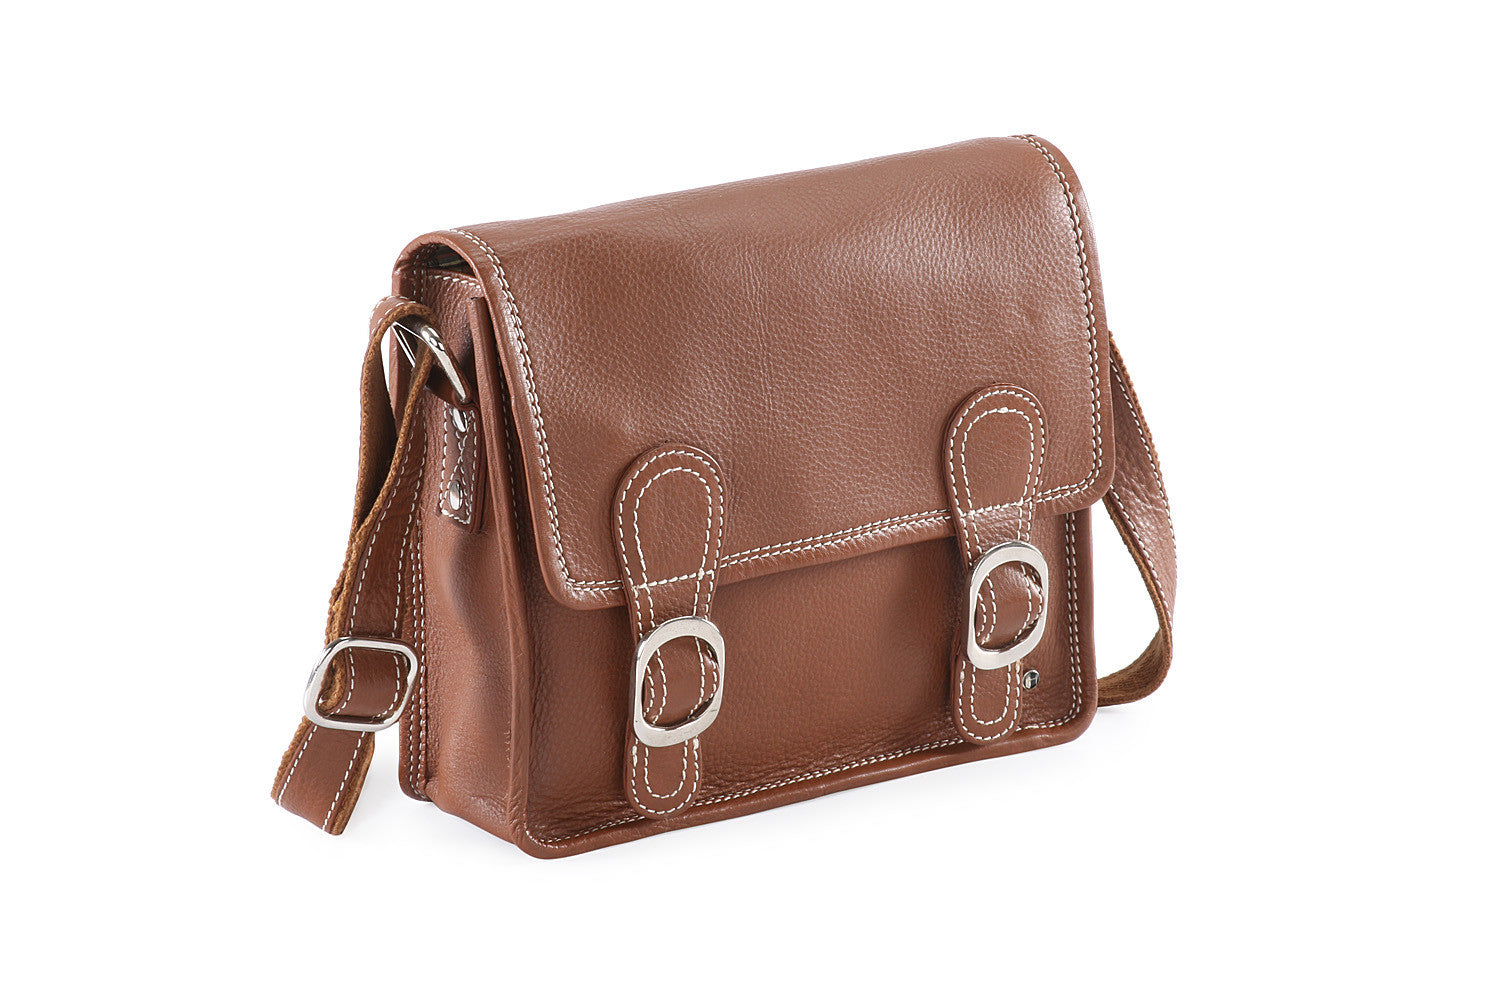 PRATICO - Xena leather small satchel bag #LB44 brown